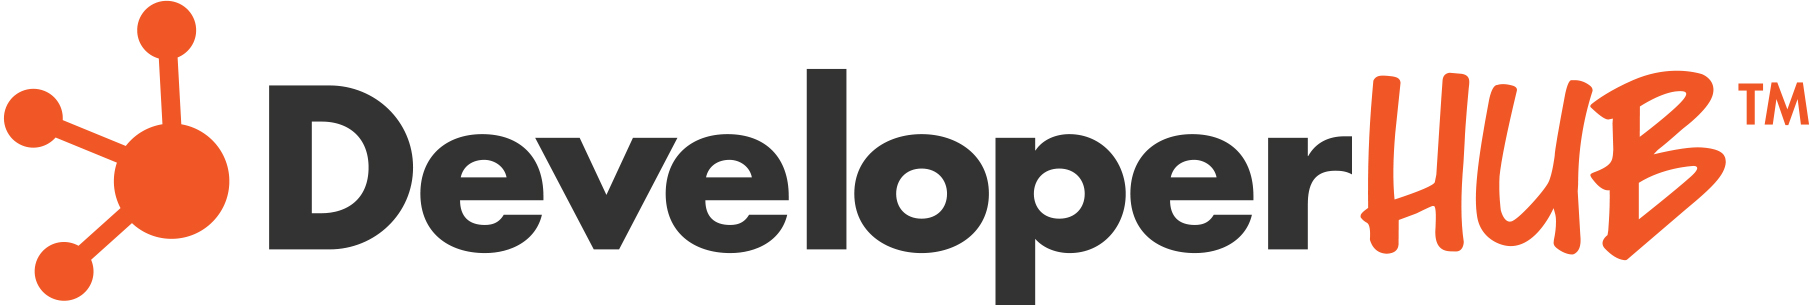 Company Logo For DeveloperHUB&trade;'